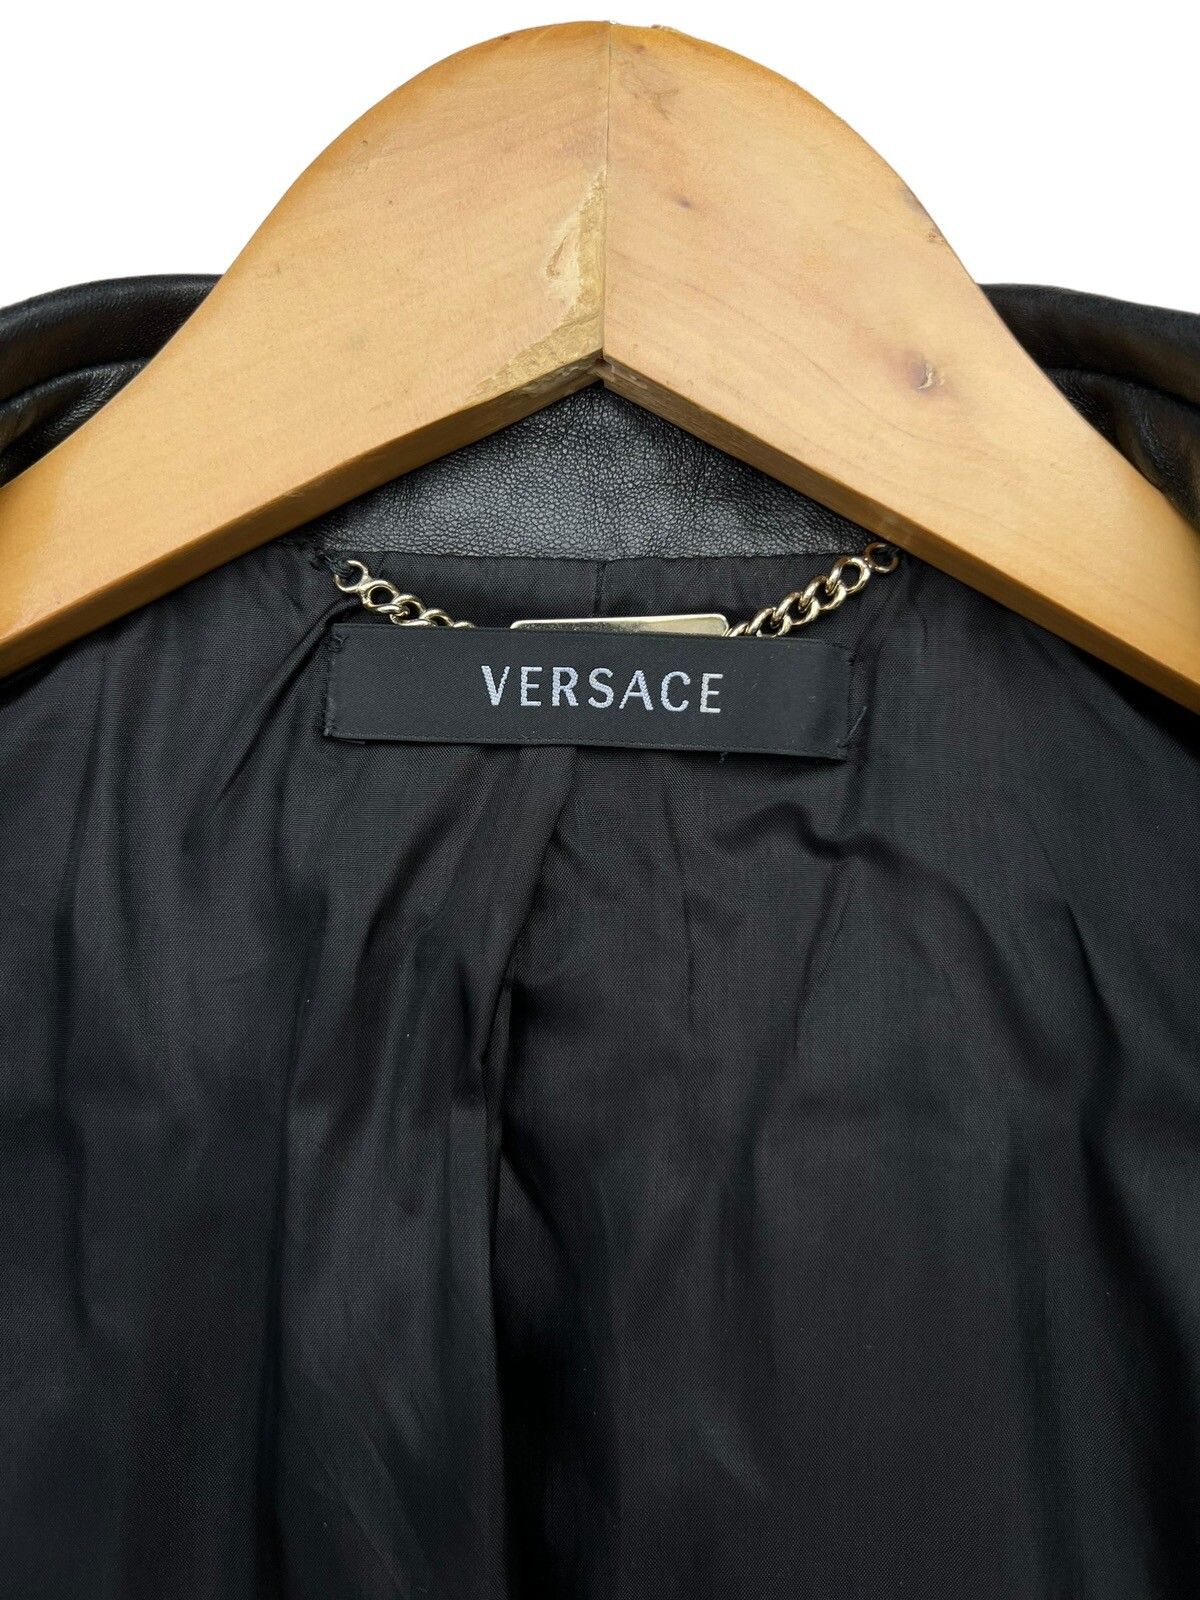 Versace Leather Jacket - 8